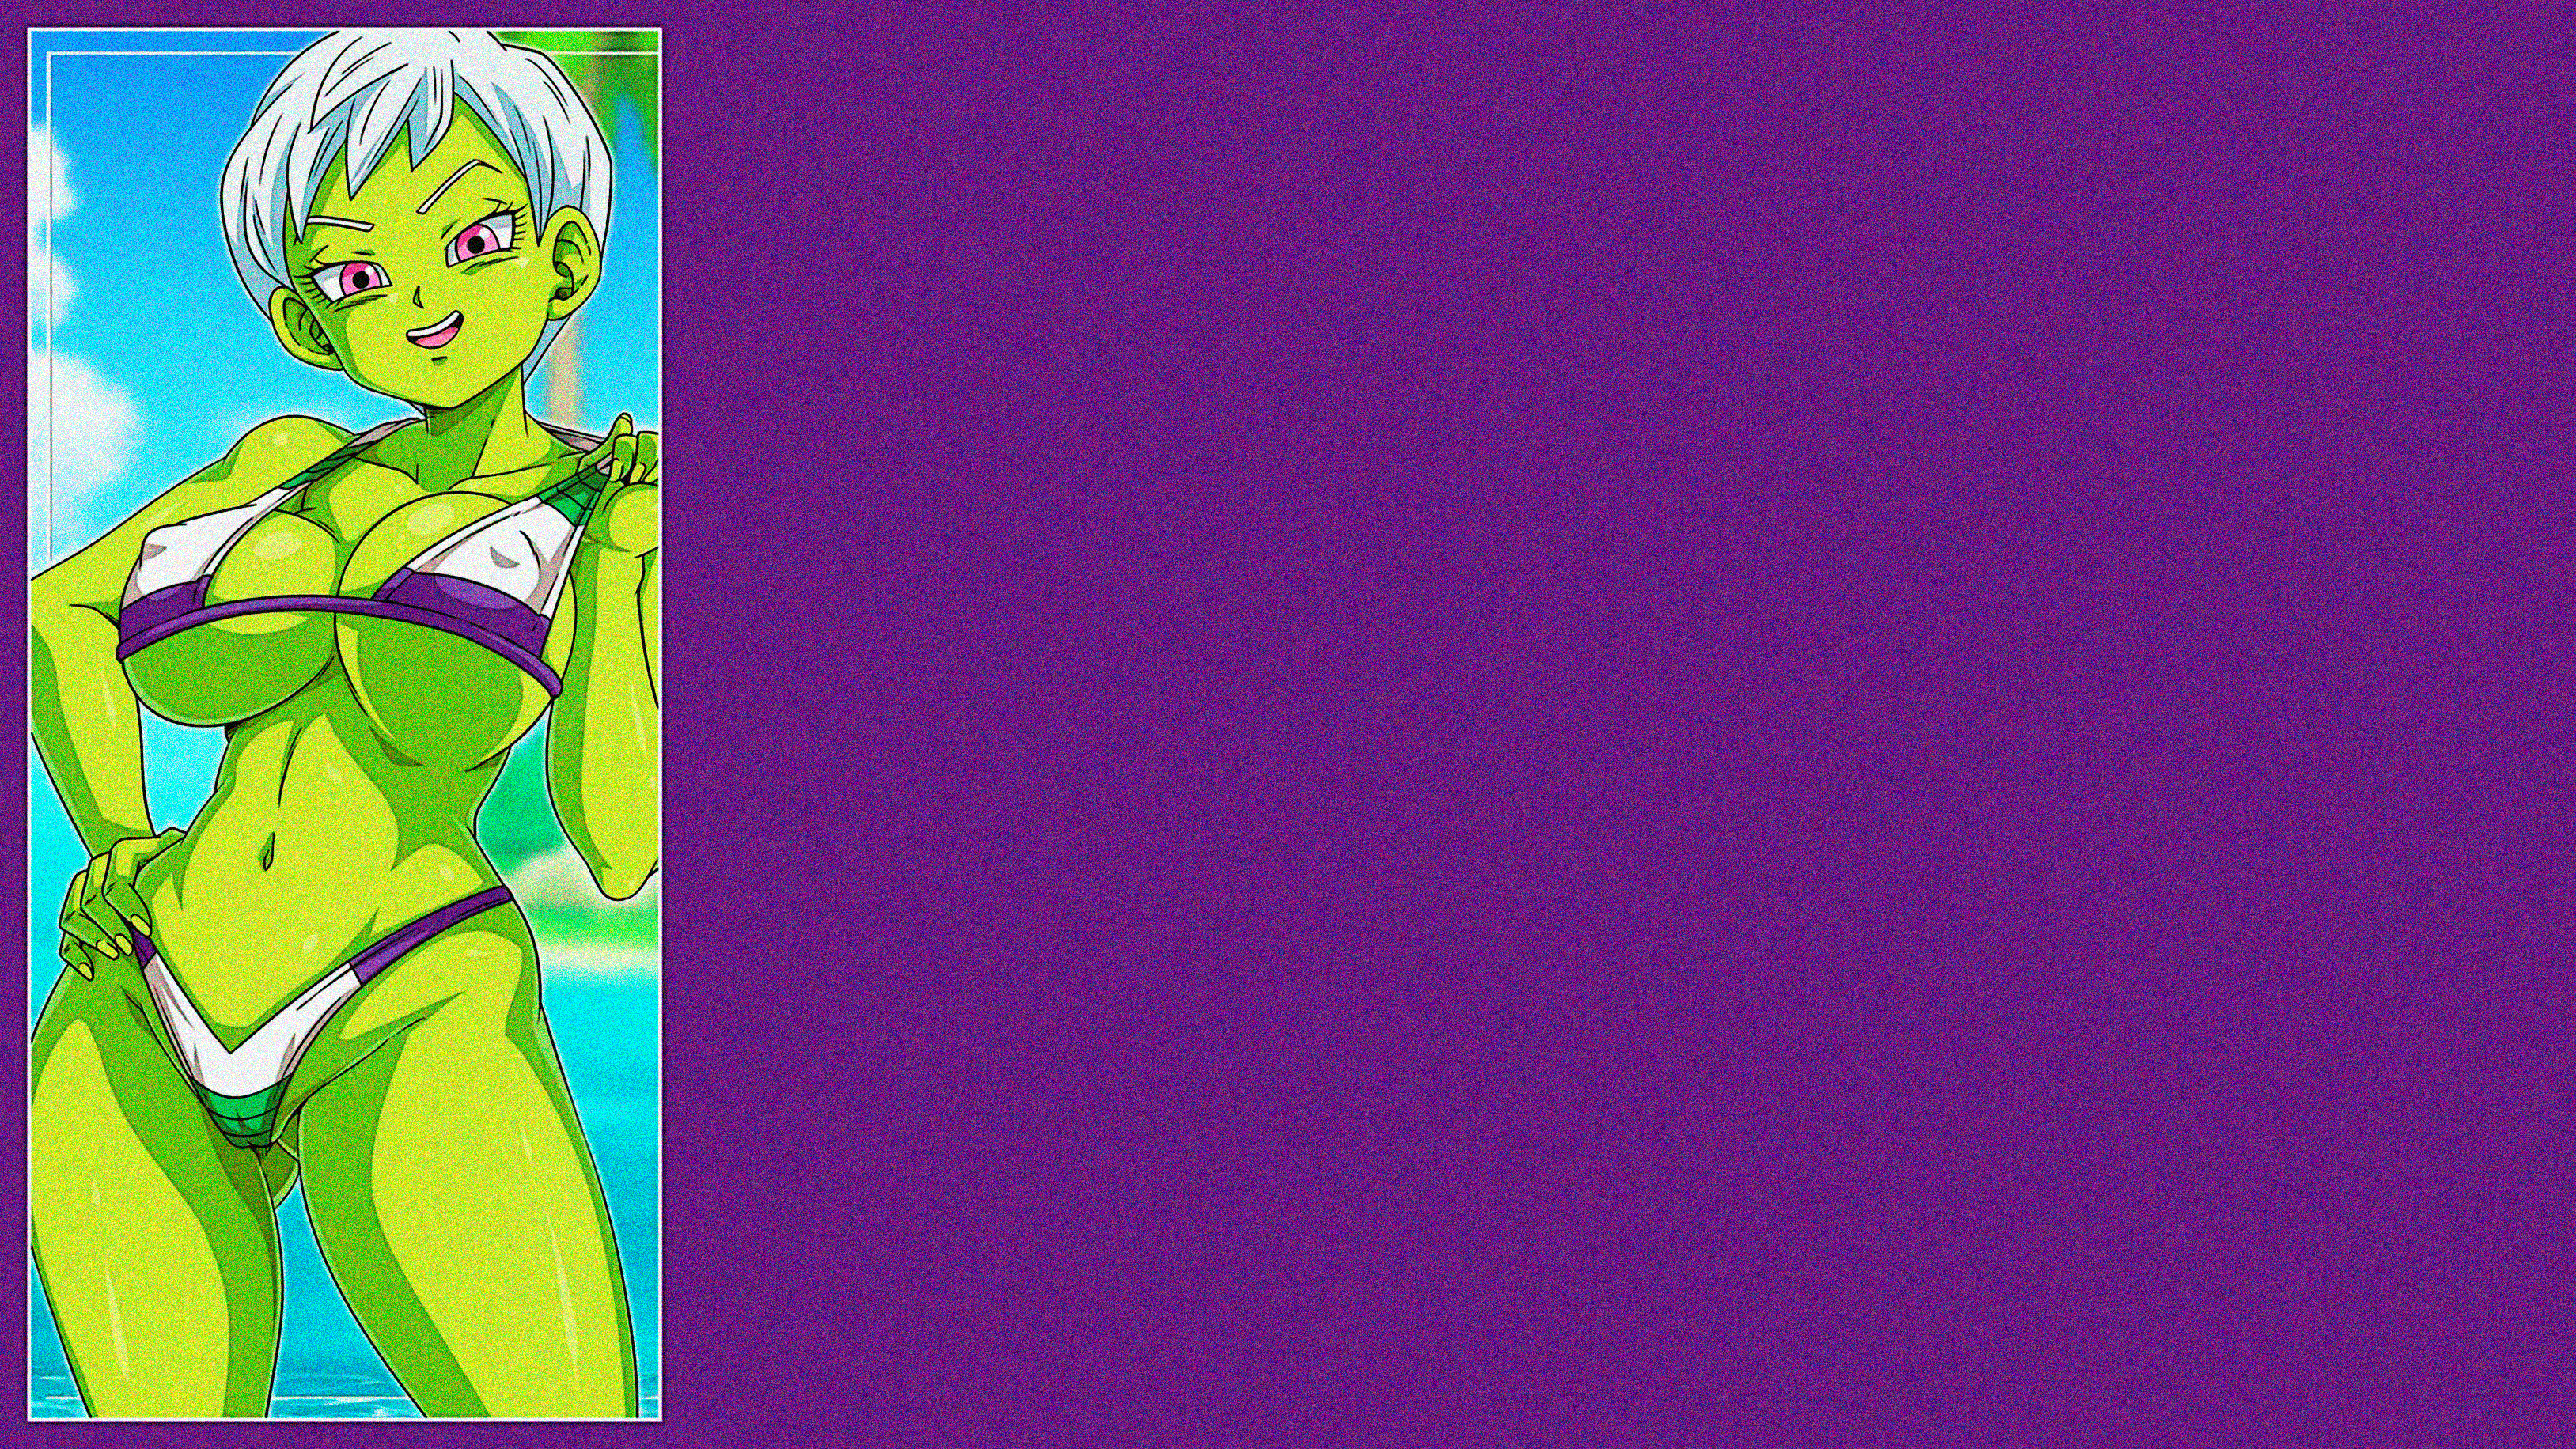 Anime 3256x1832 anime anime girls Dragon Ball Dragon Ball Z Dragon Ball Super ecchi boobs big boobs huge breasts thighs bikini short hair white hair pink eyes green skin yellow nails Cheelai palm trees